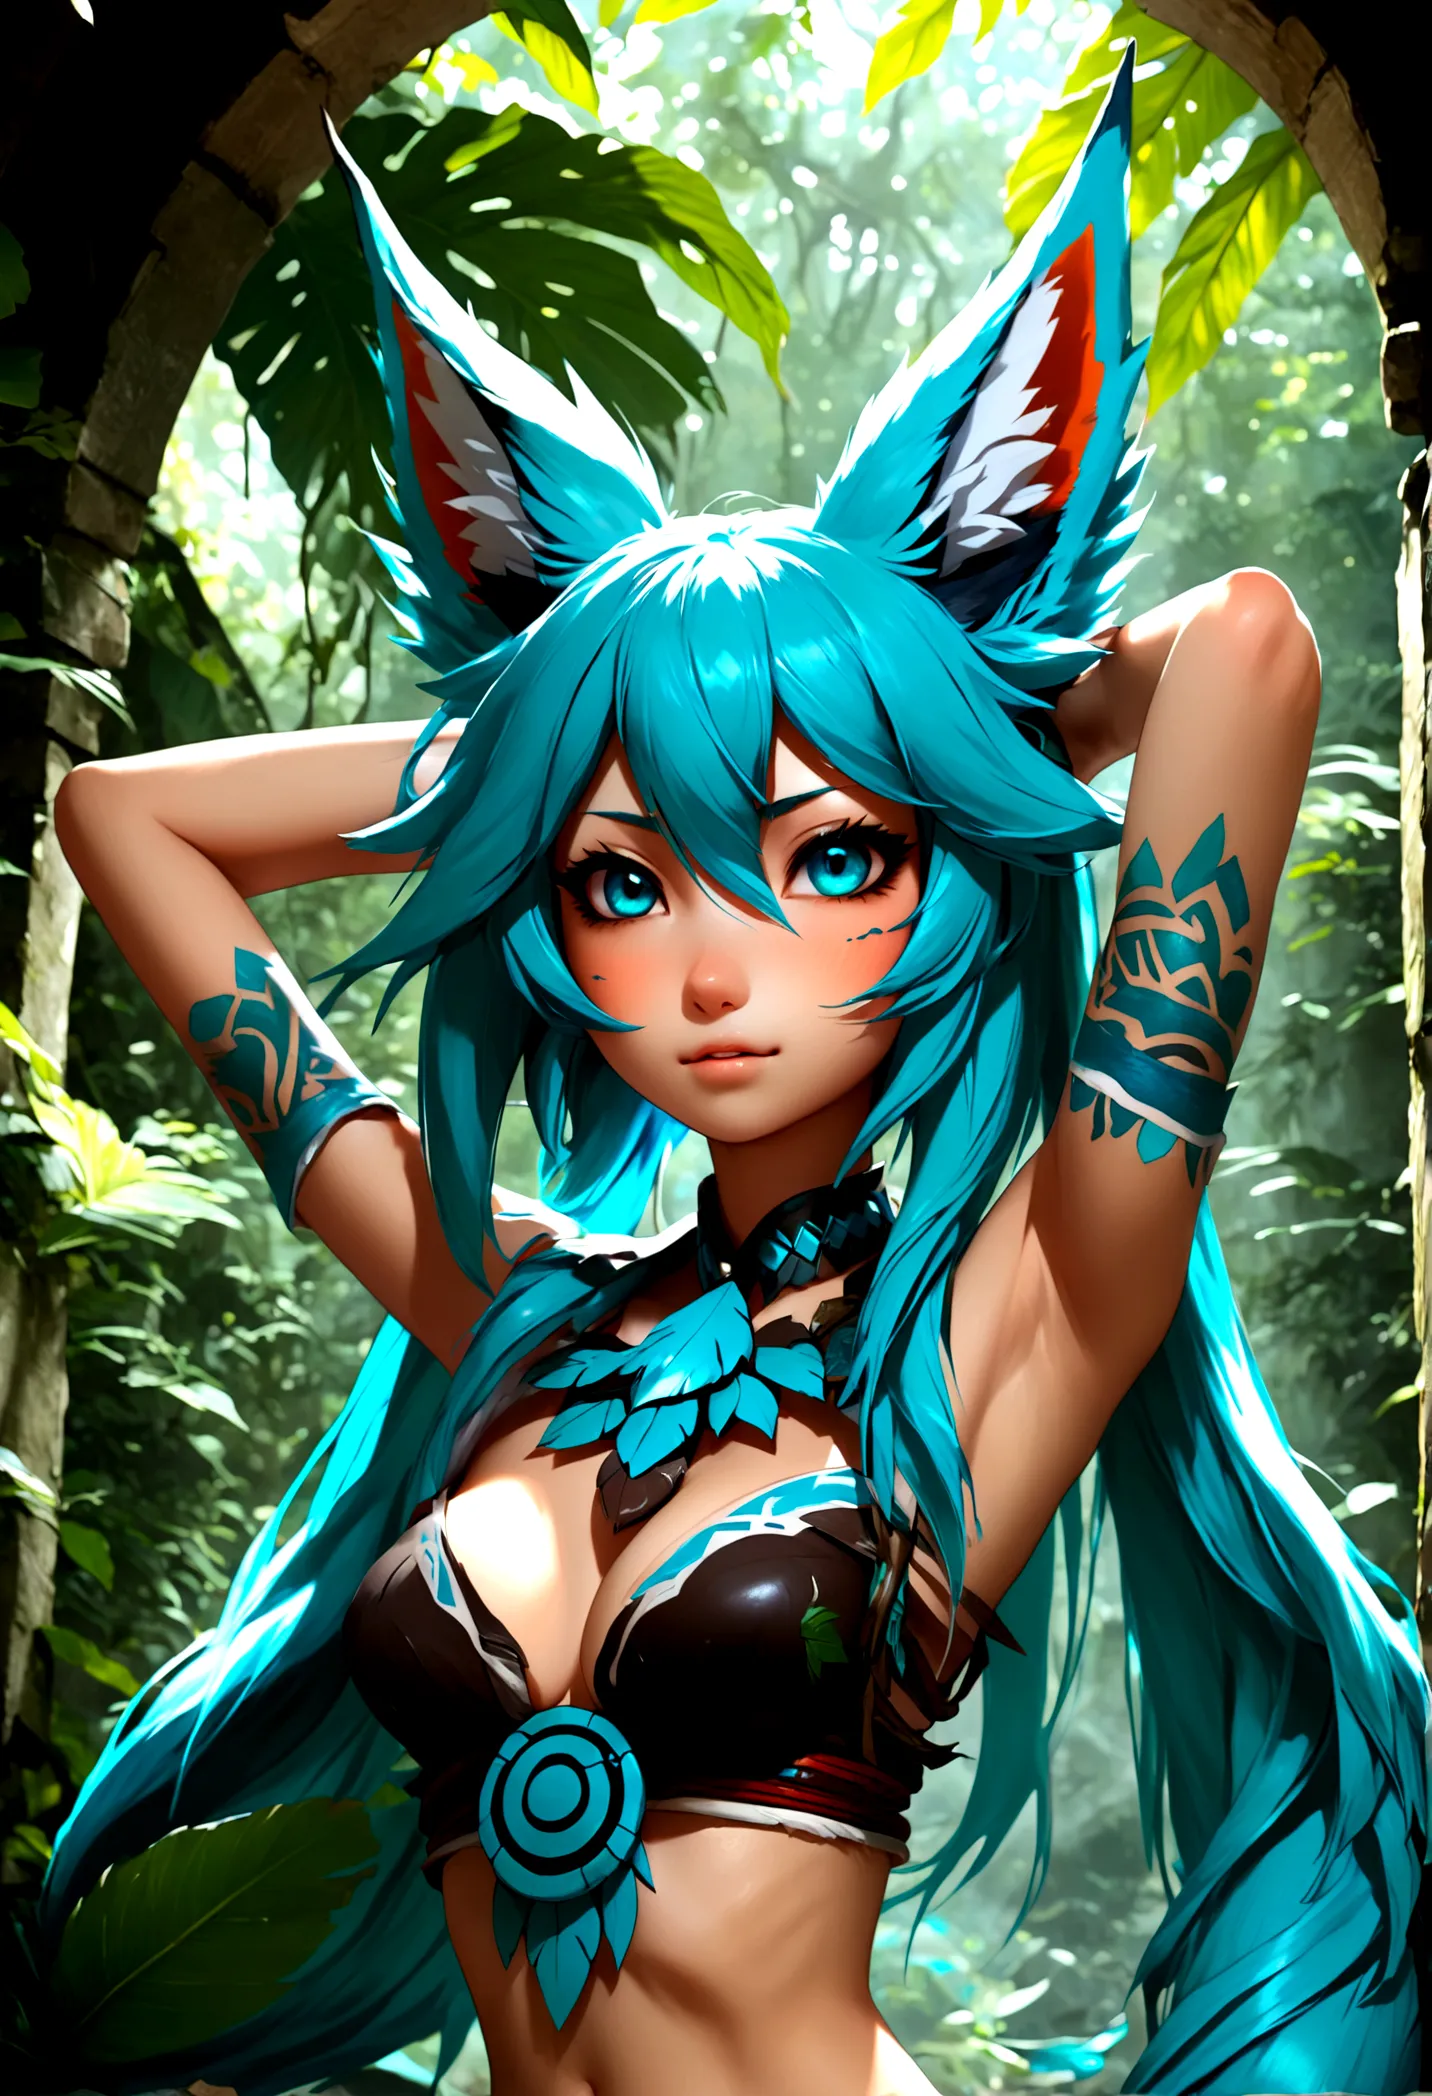 Miku Hatsune, add high definition add_detail:1, blue fur,kitsune ears, tribal tattoo add_detail:1, in a ruins in the jungle, bar...